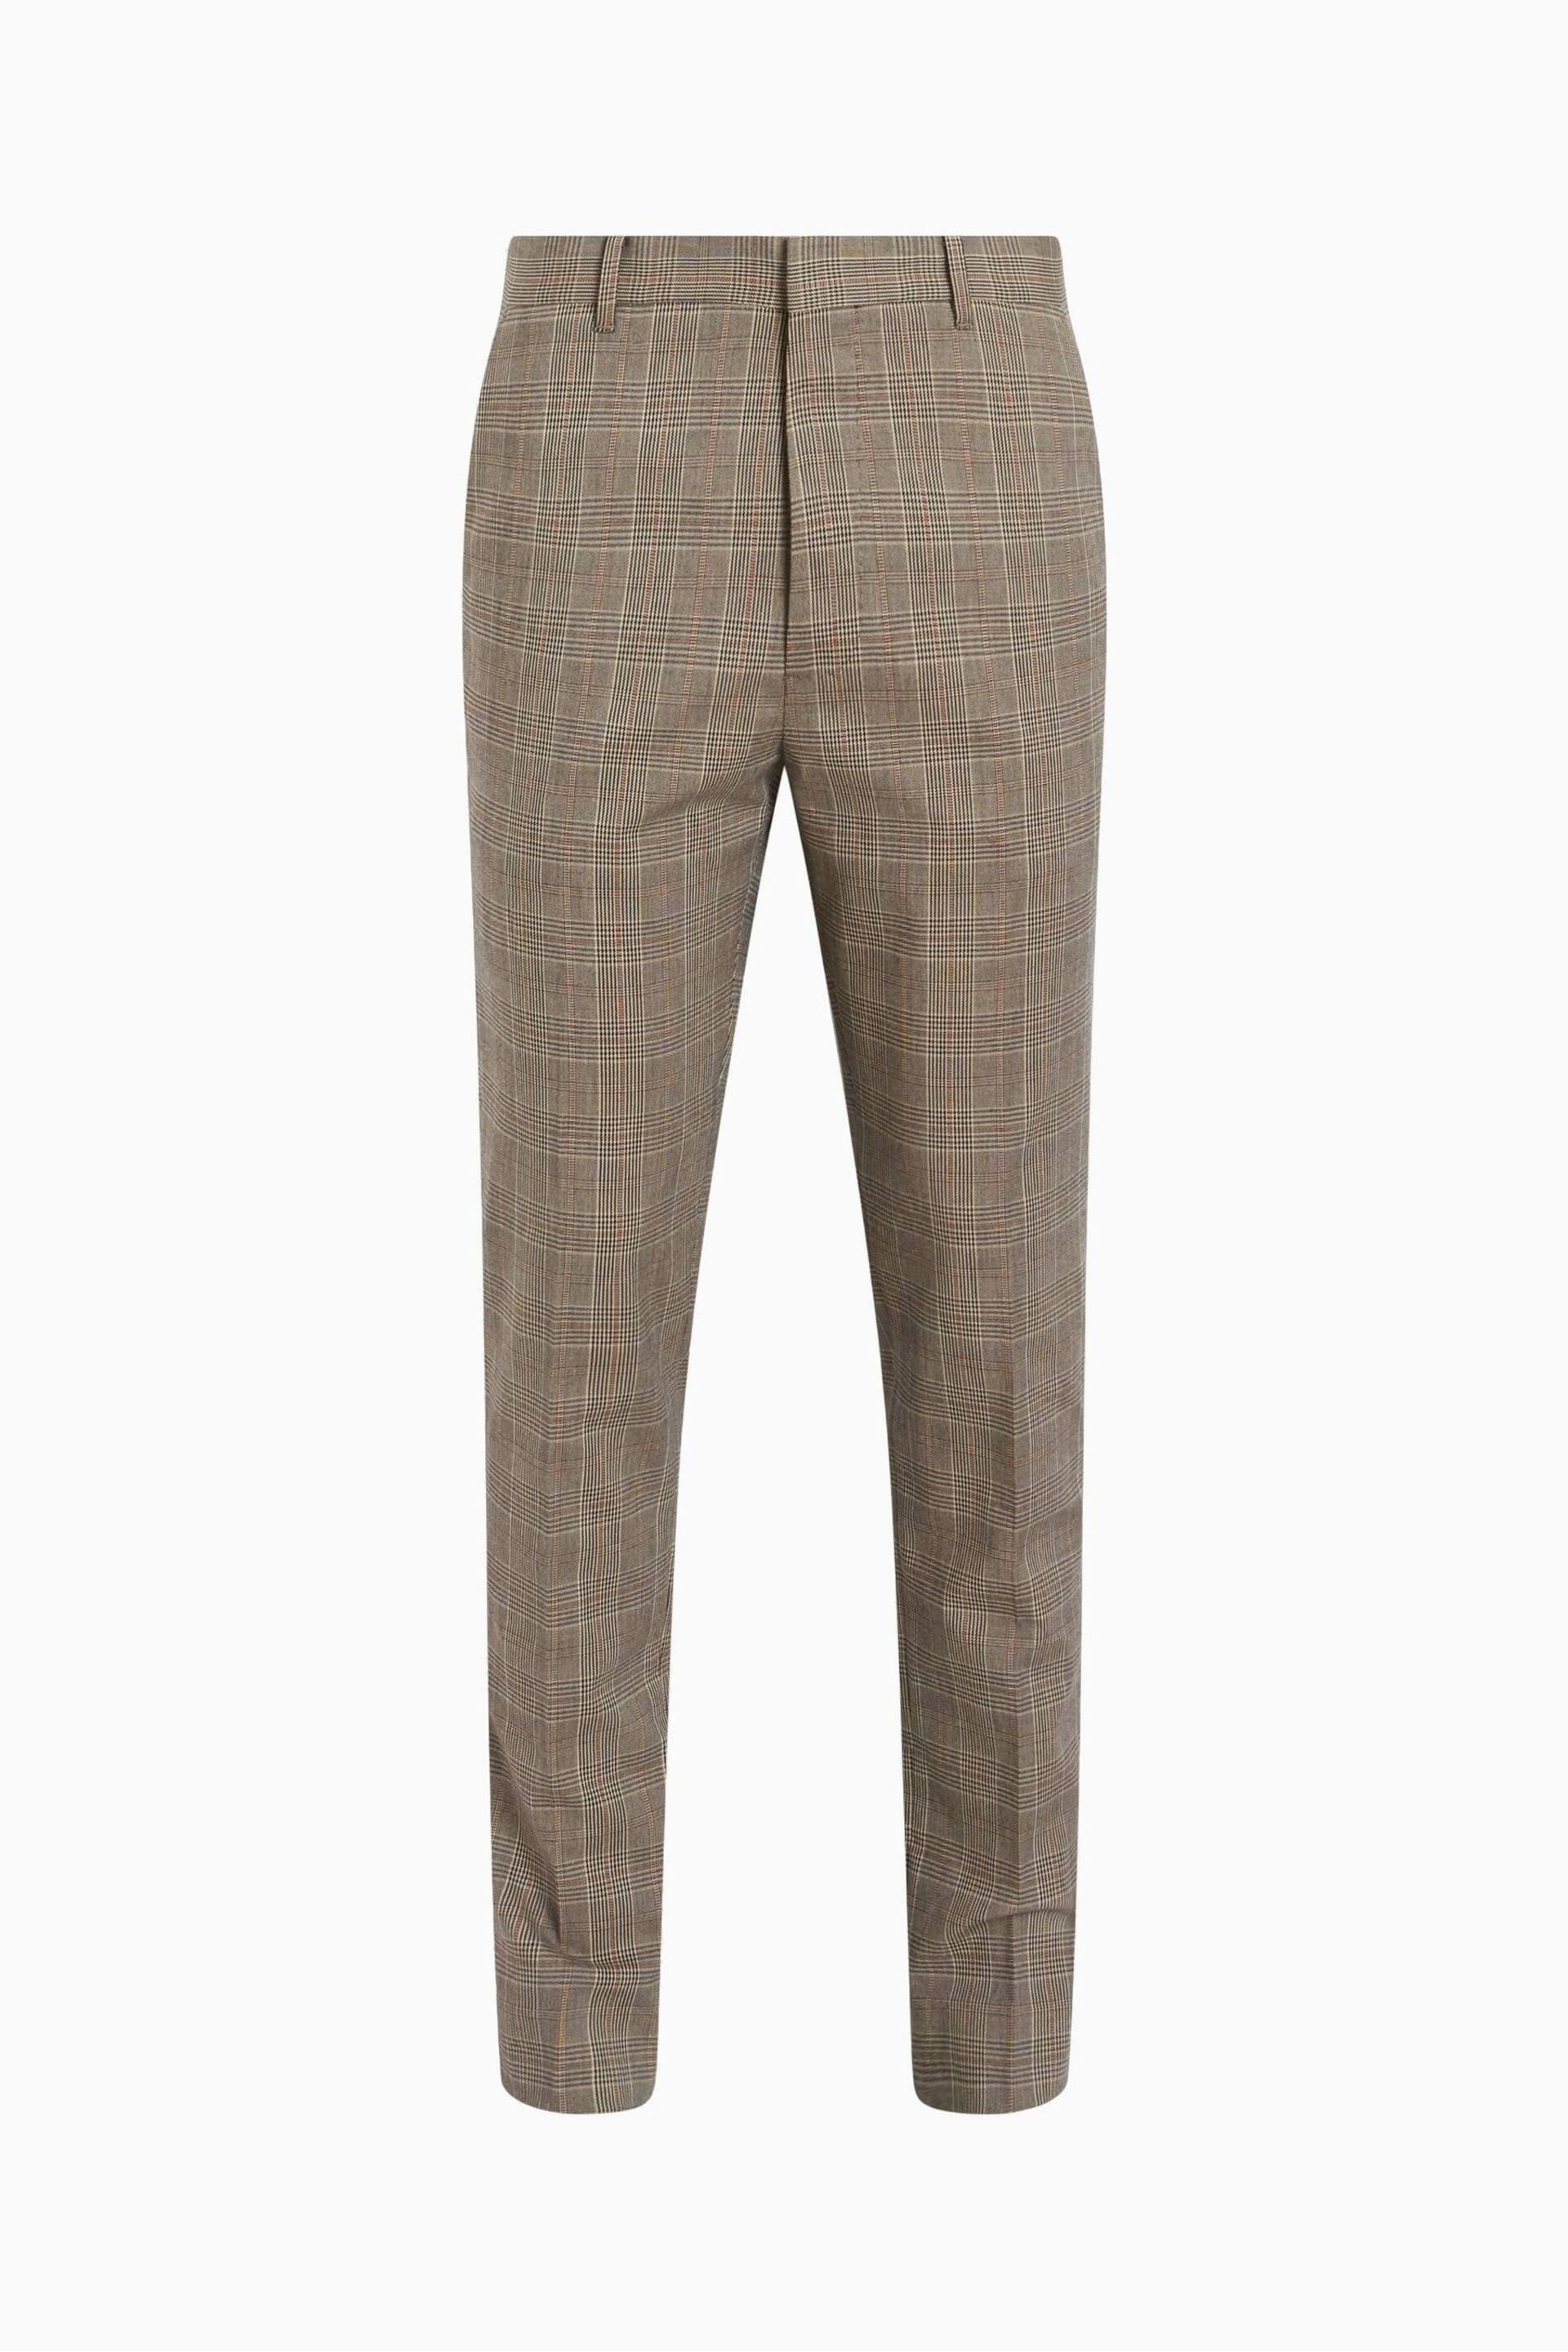 AllSaints Brown Maffrett Trousers - Image 7 of 7